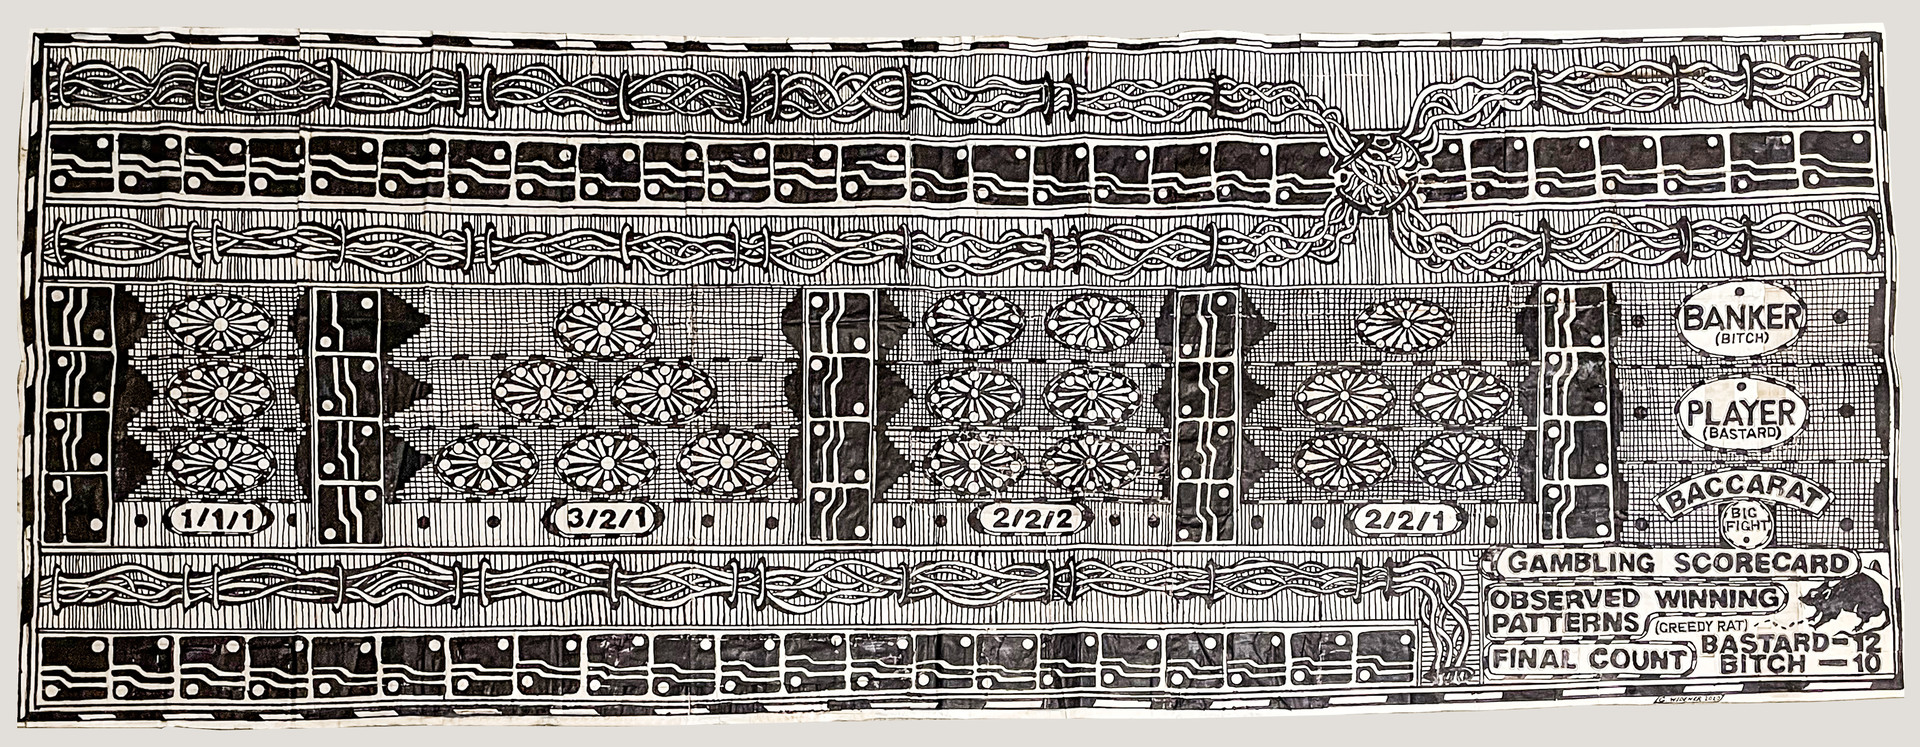 George Widener, Player Banker Gambling Scorecard, 2020, Mixed media on paper, 68.6 x 181.6 cm, GW 021